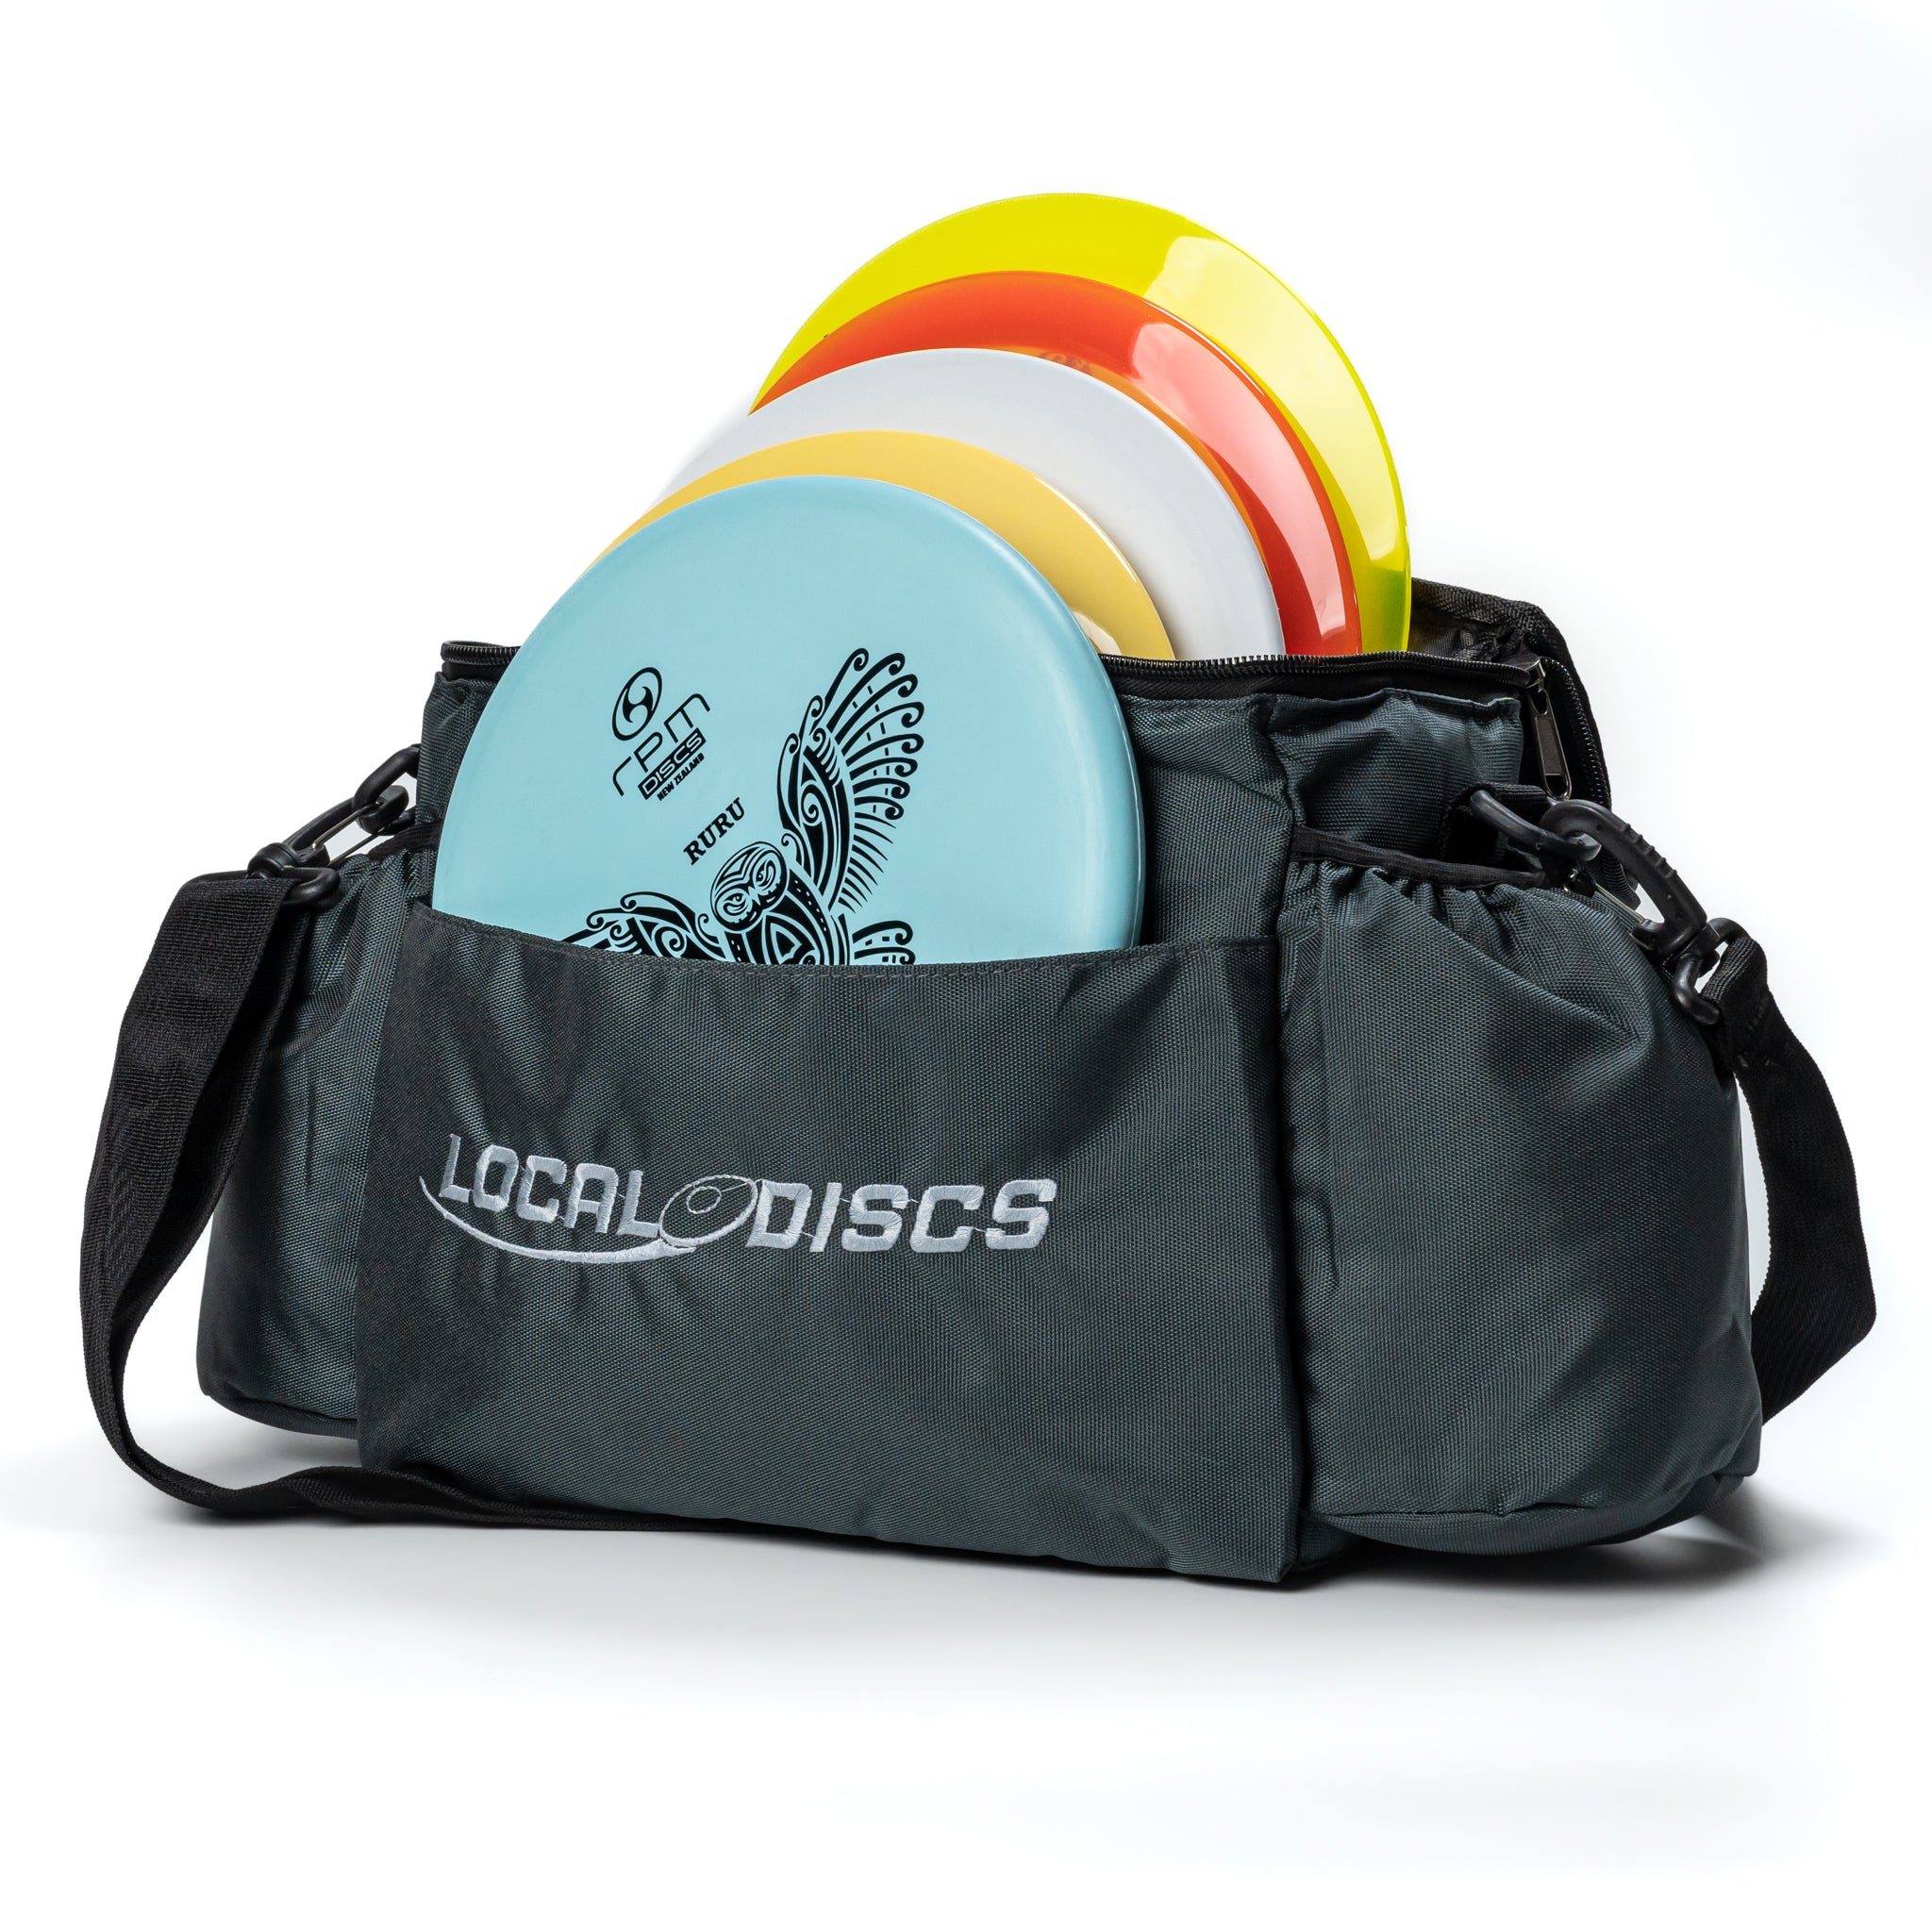 Local Discs Pro Starter Disc Golf Set with grey bag and Ruru putter